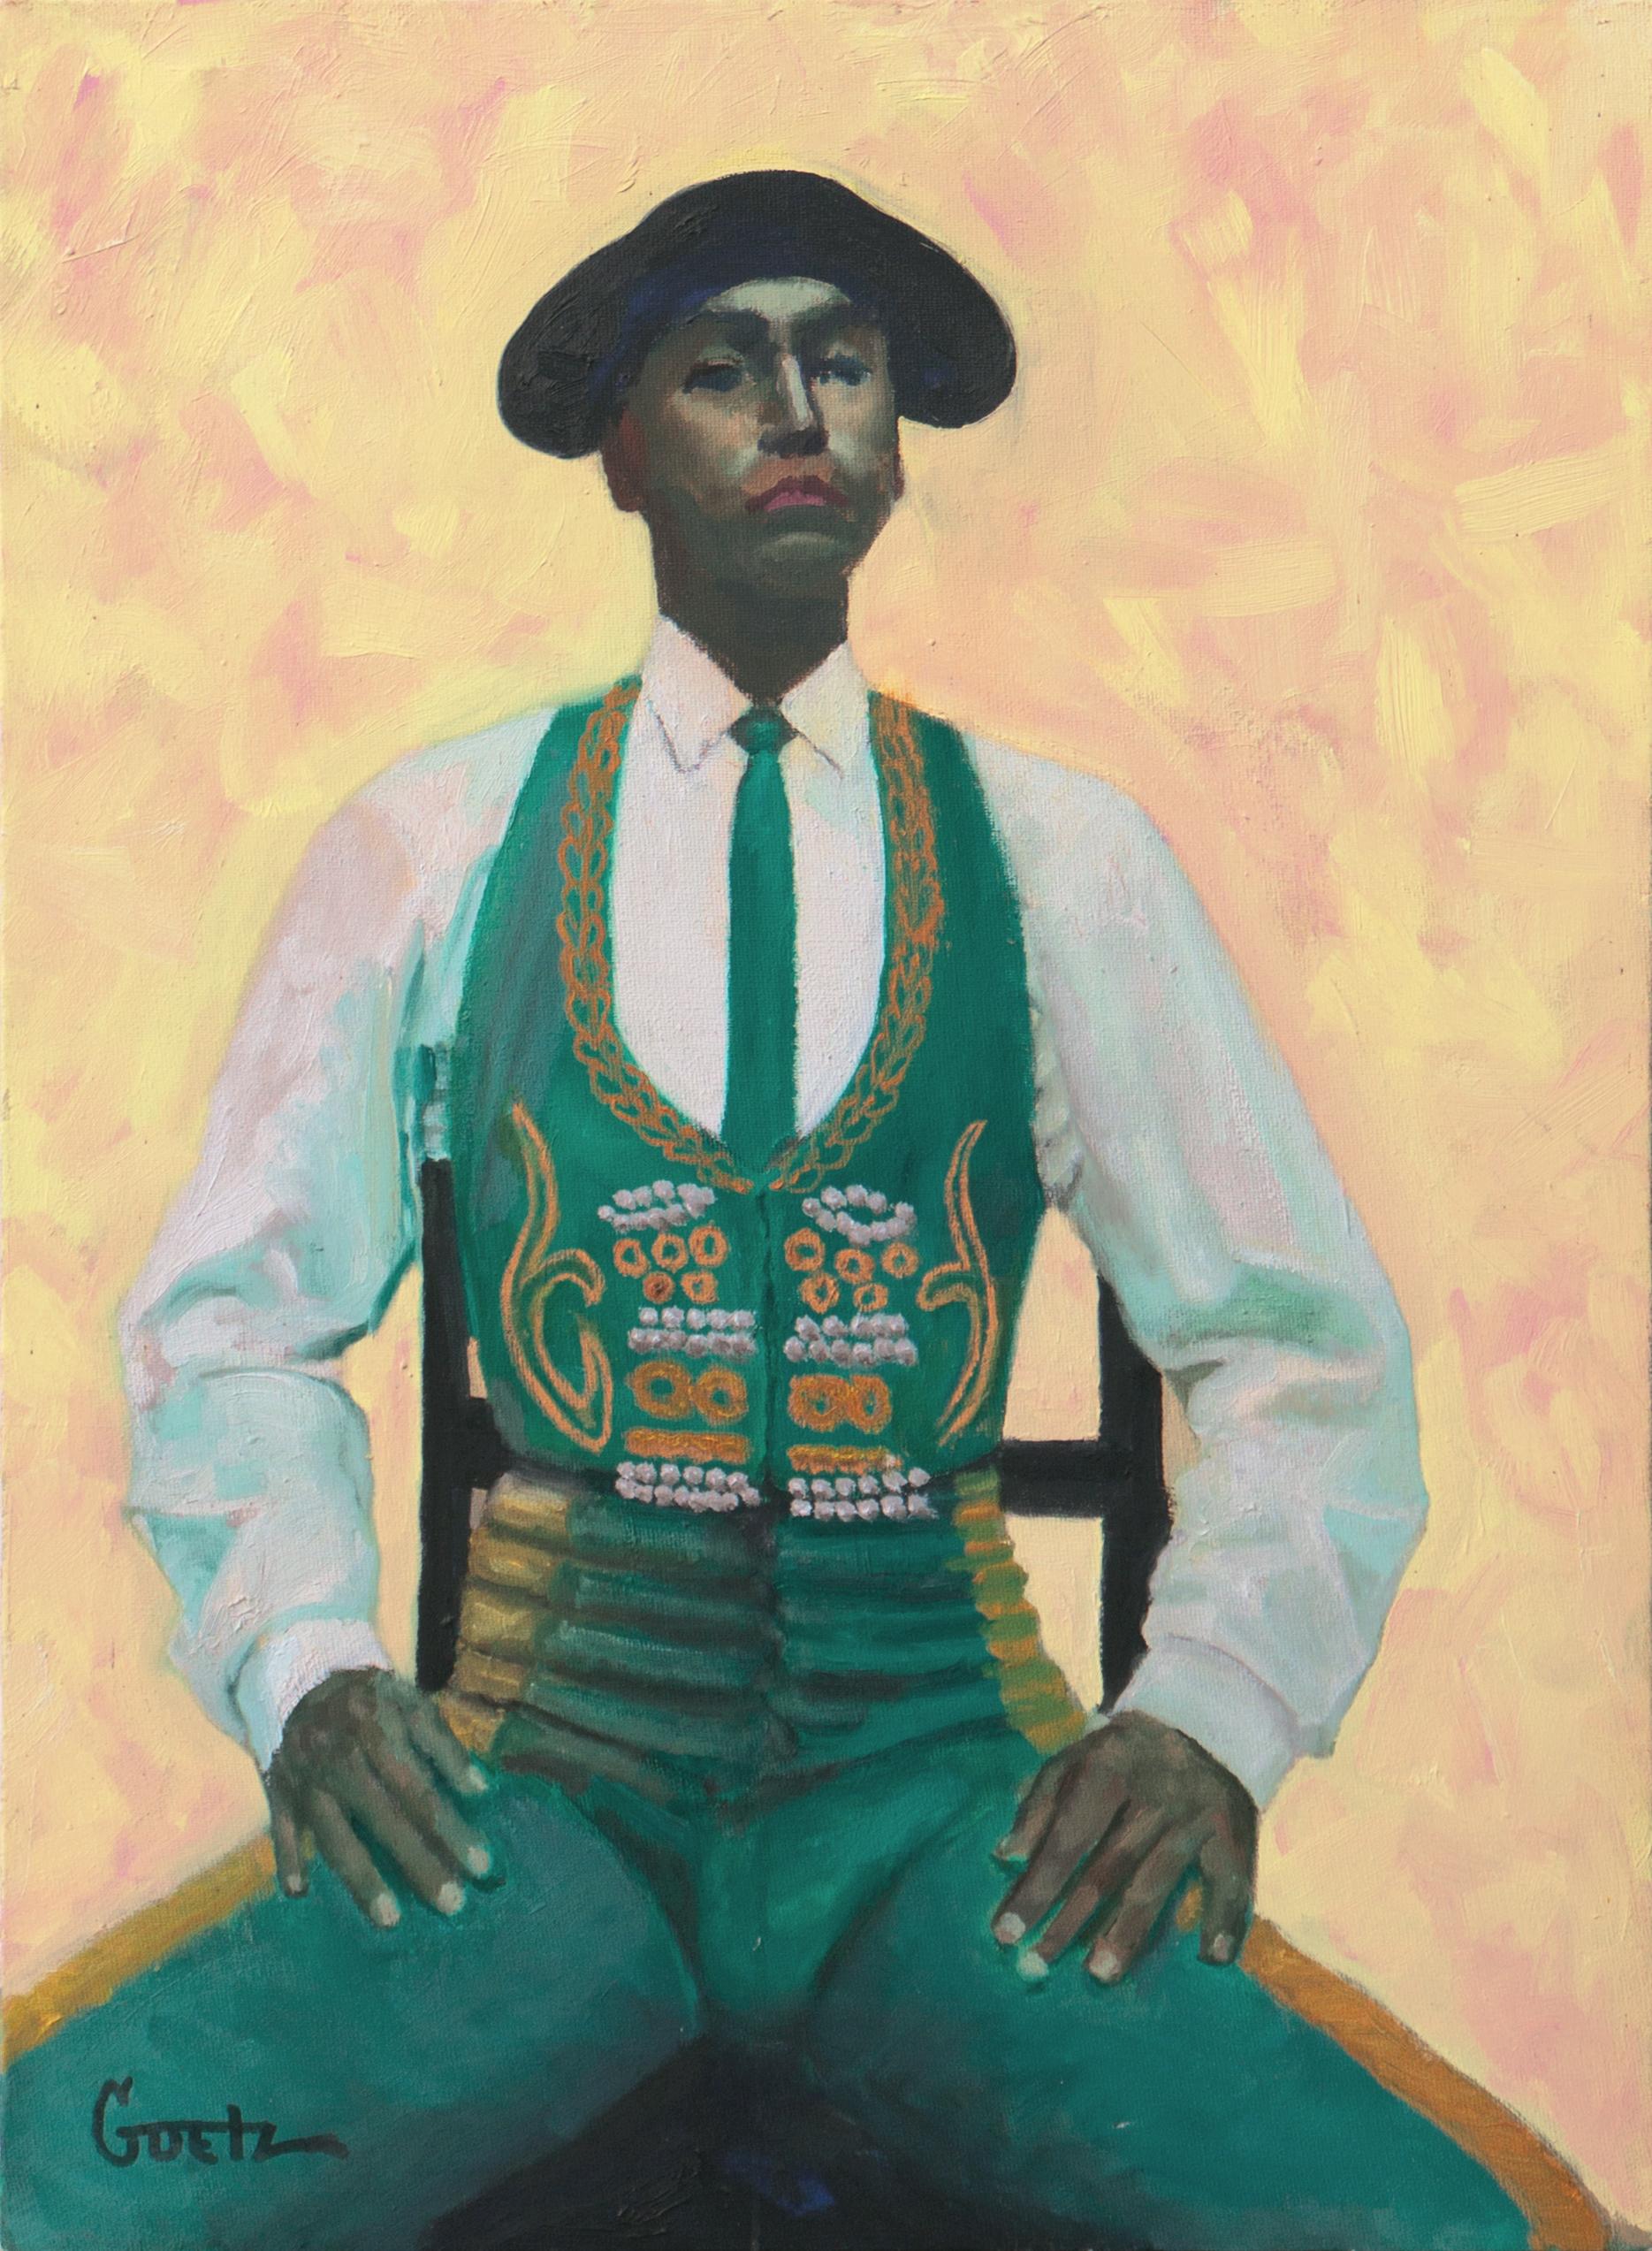 Jack Goetz Portrait Painting - 'Toreador', California, Post Impressionist Oil, Santa Monica College